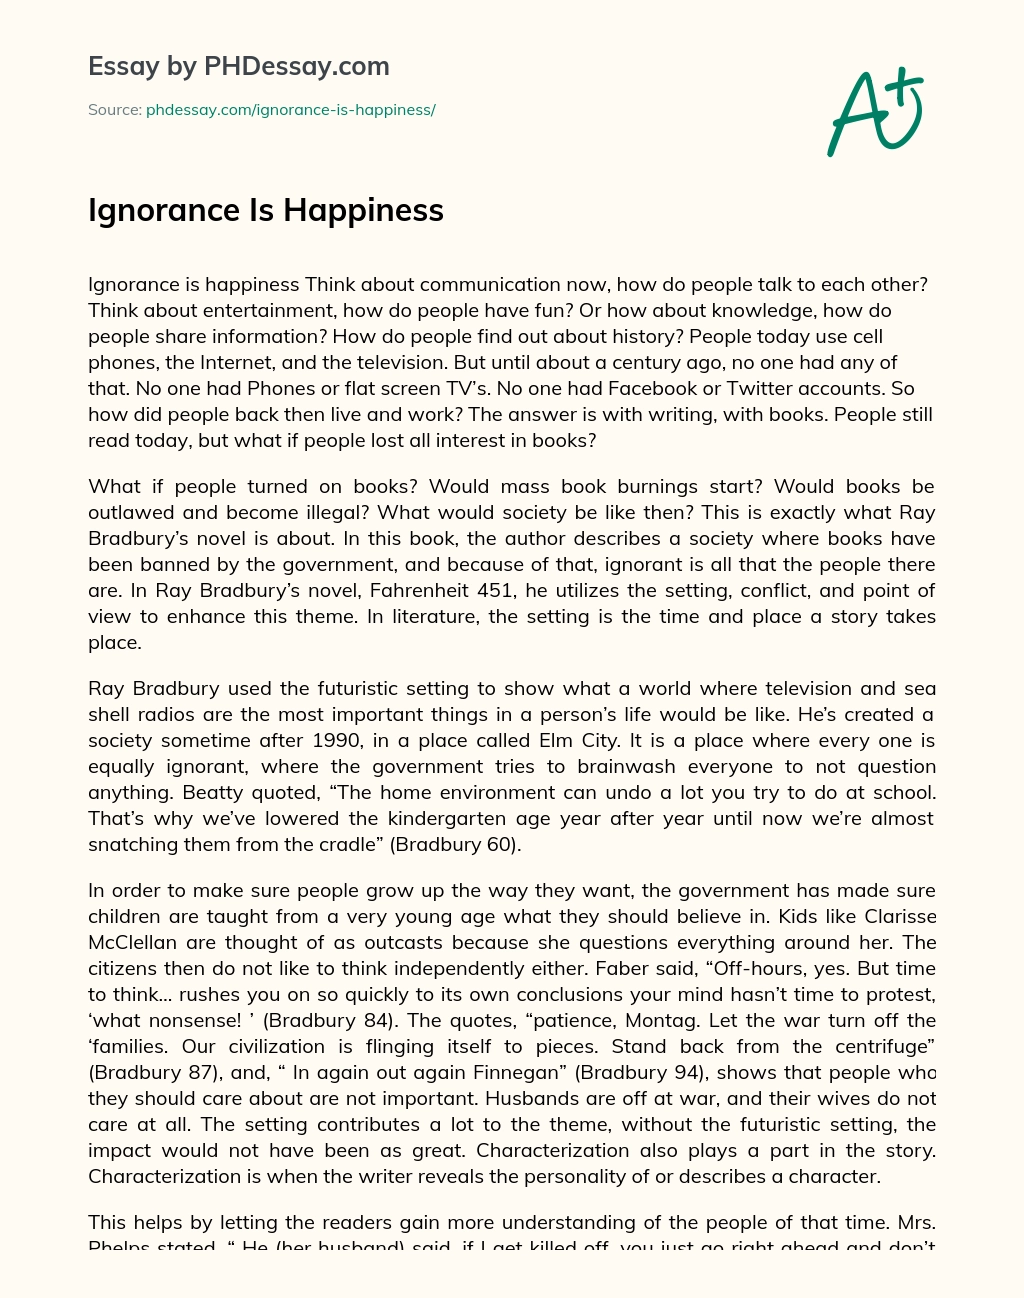 Ignorance Is Happiness essay